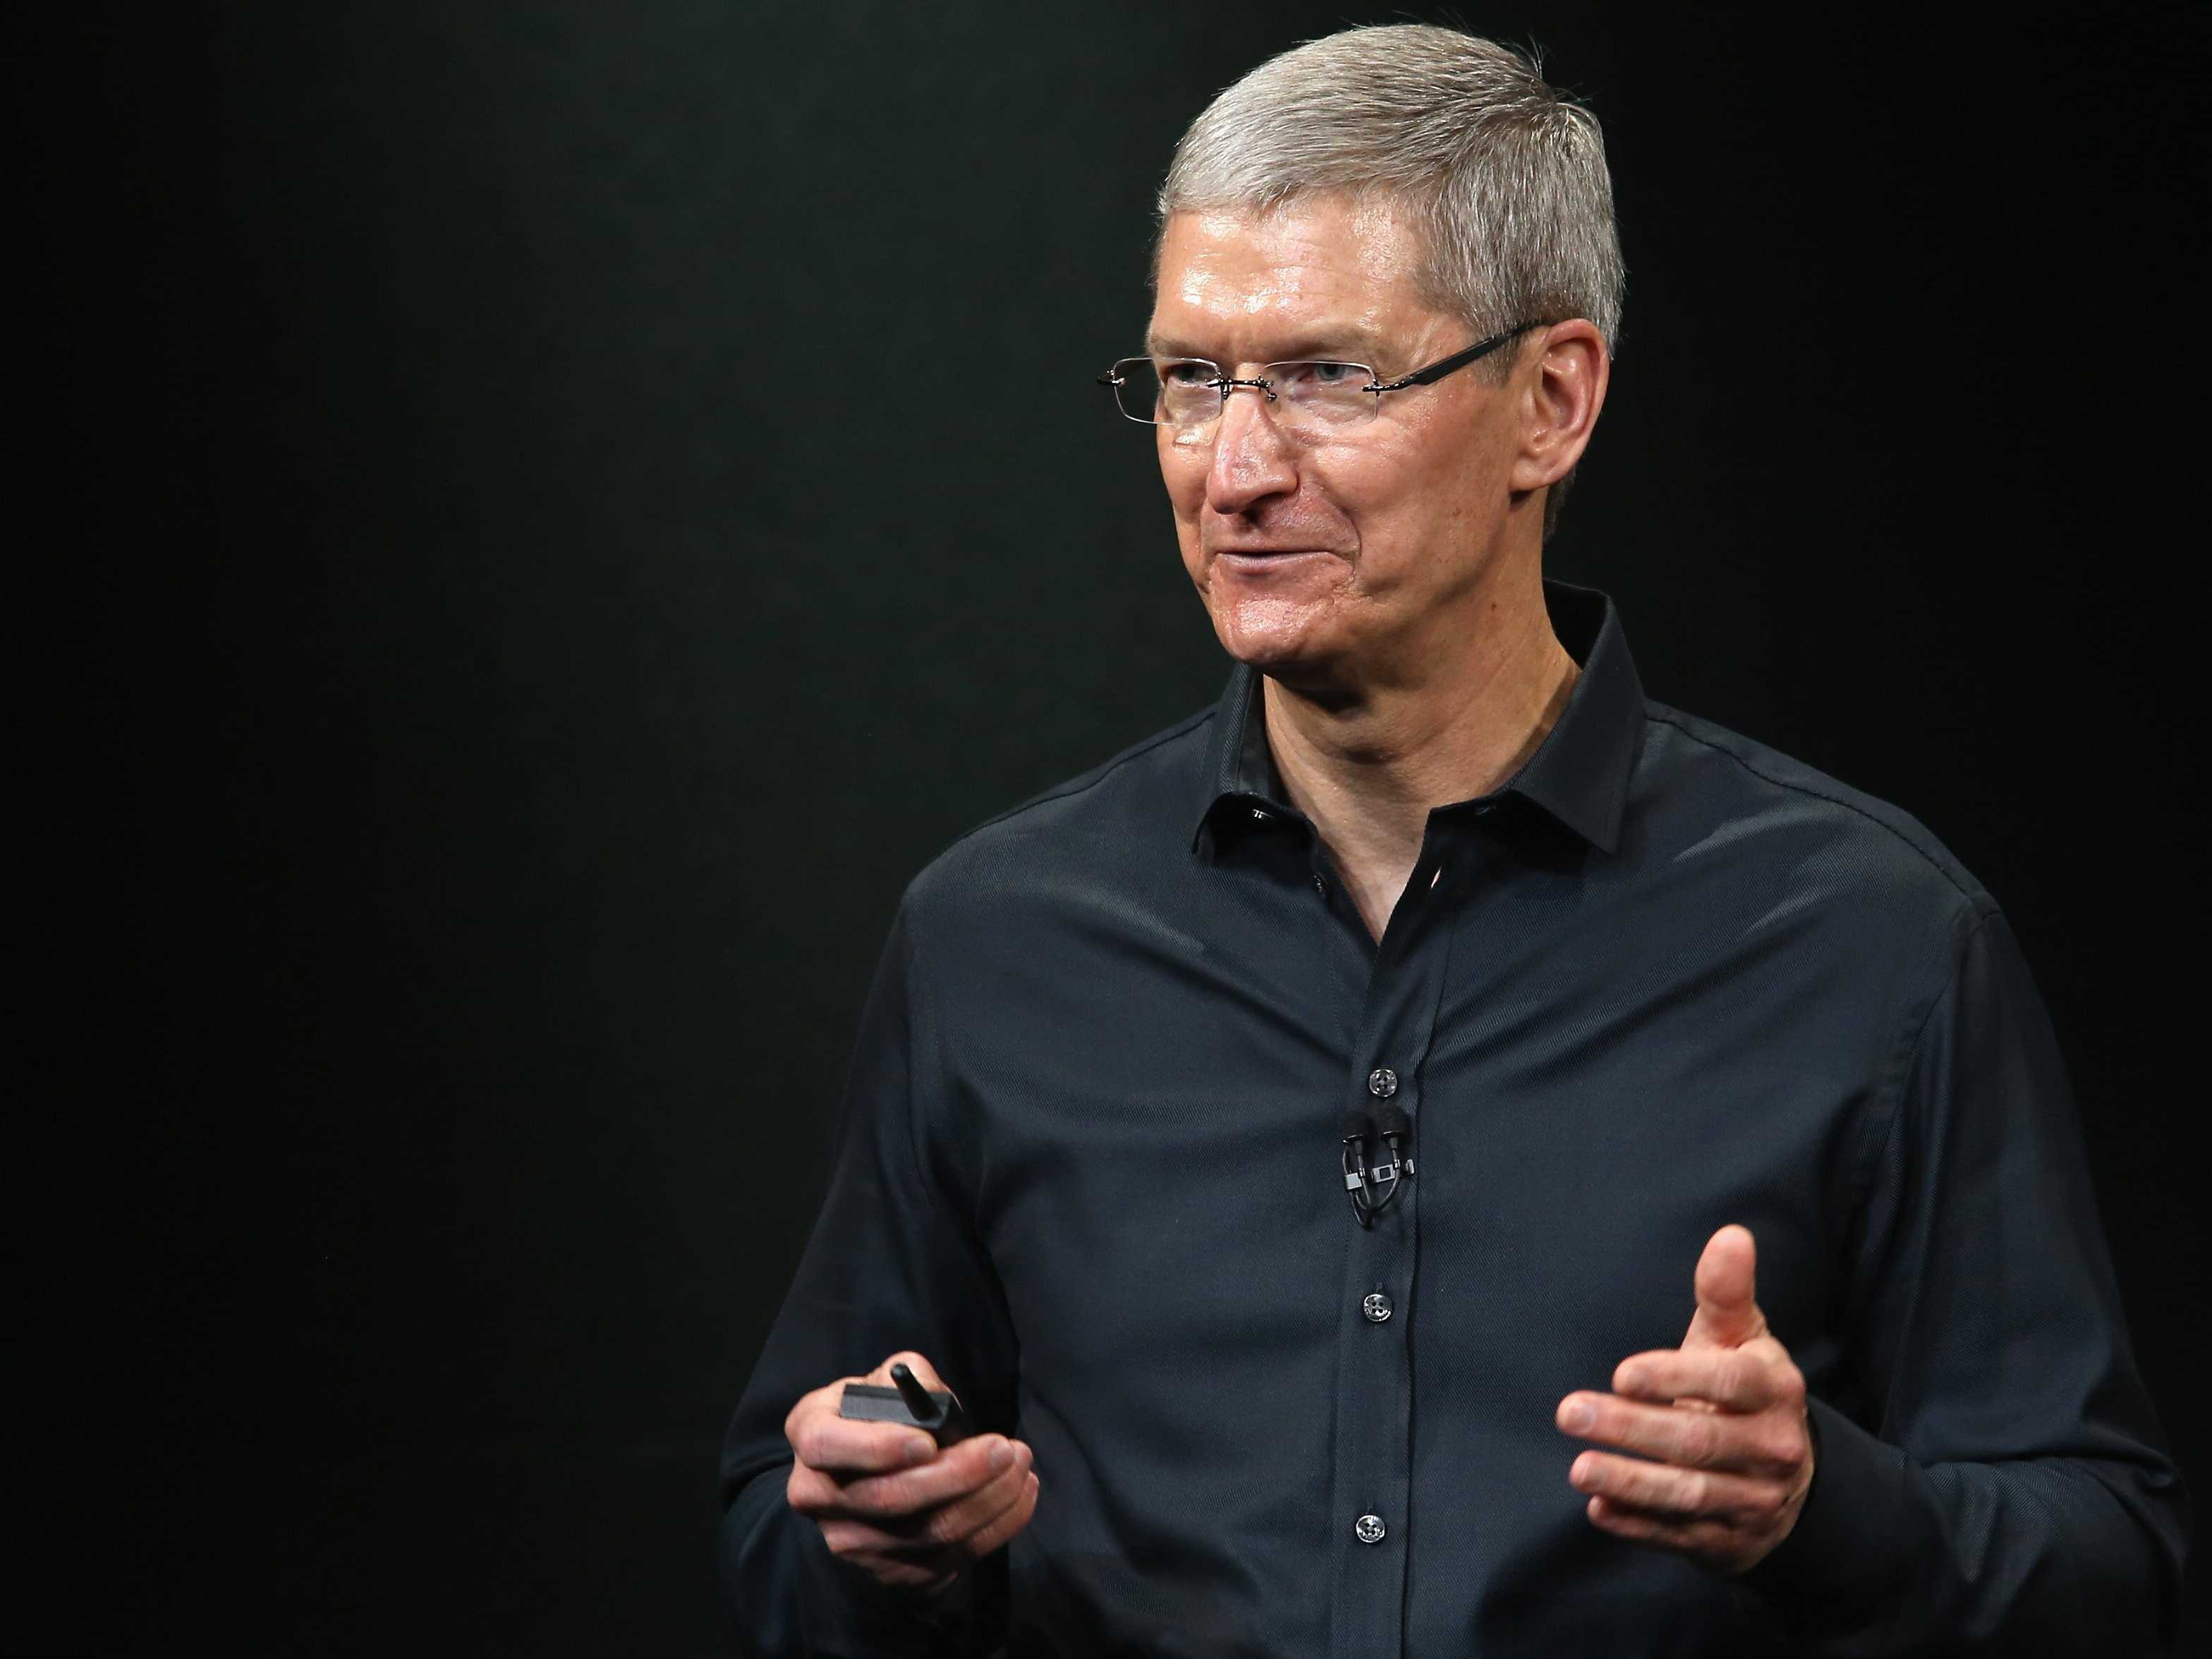 Гендиректор Apple Тім Кук зізнався у гомосексуальності